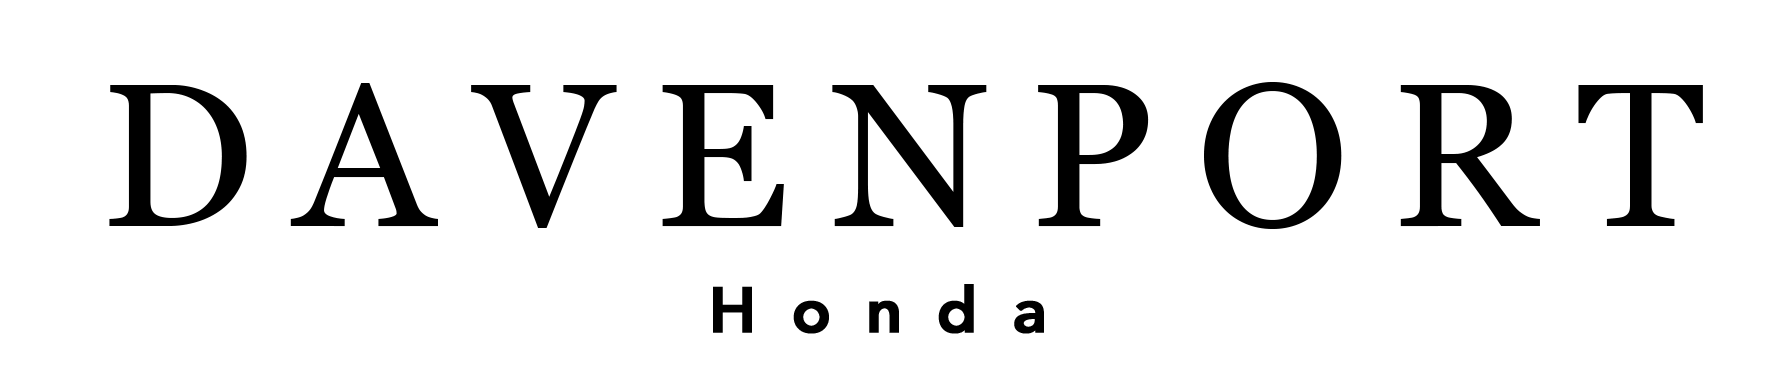 Honda HR-V Logo - 2019 Honda HR-V vs 2018 Honda HR-V